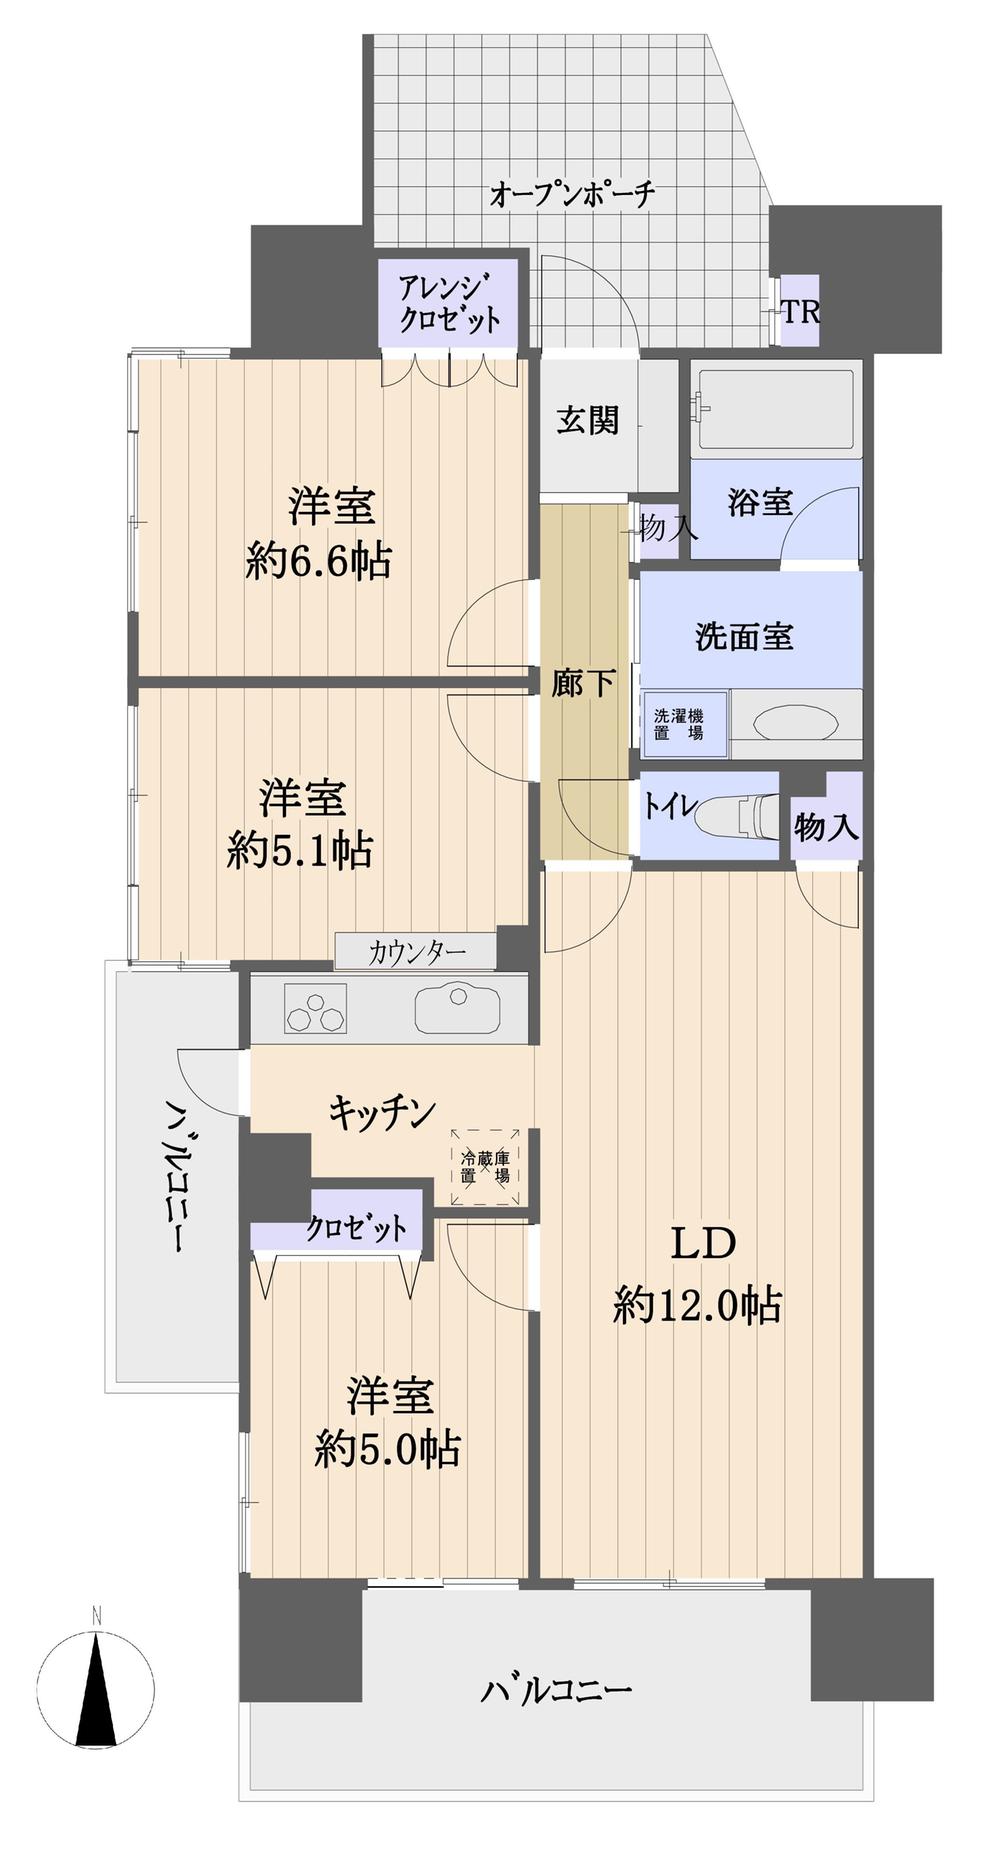 Floor plan. 3LDK, Price 23.8 million yen, Footprint 70.4 sq m , Balcony area 10.64 sq m